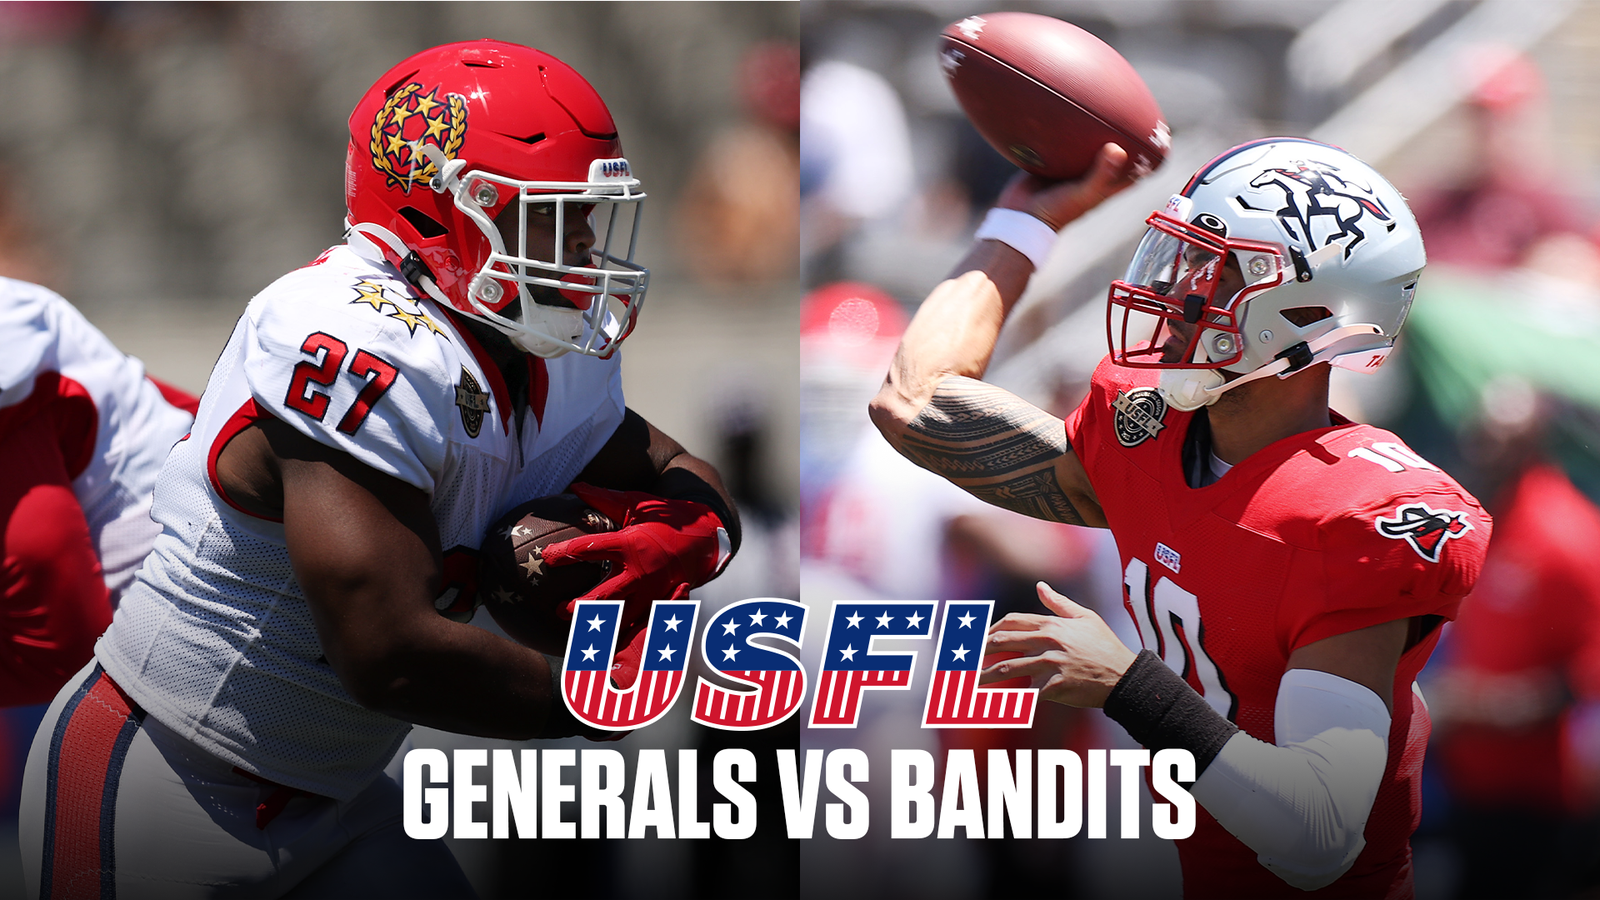 Generals defeat Bandits, clinch playoff berth